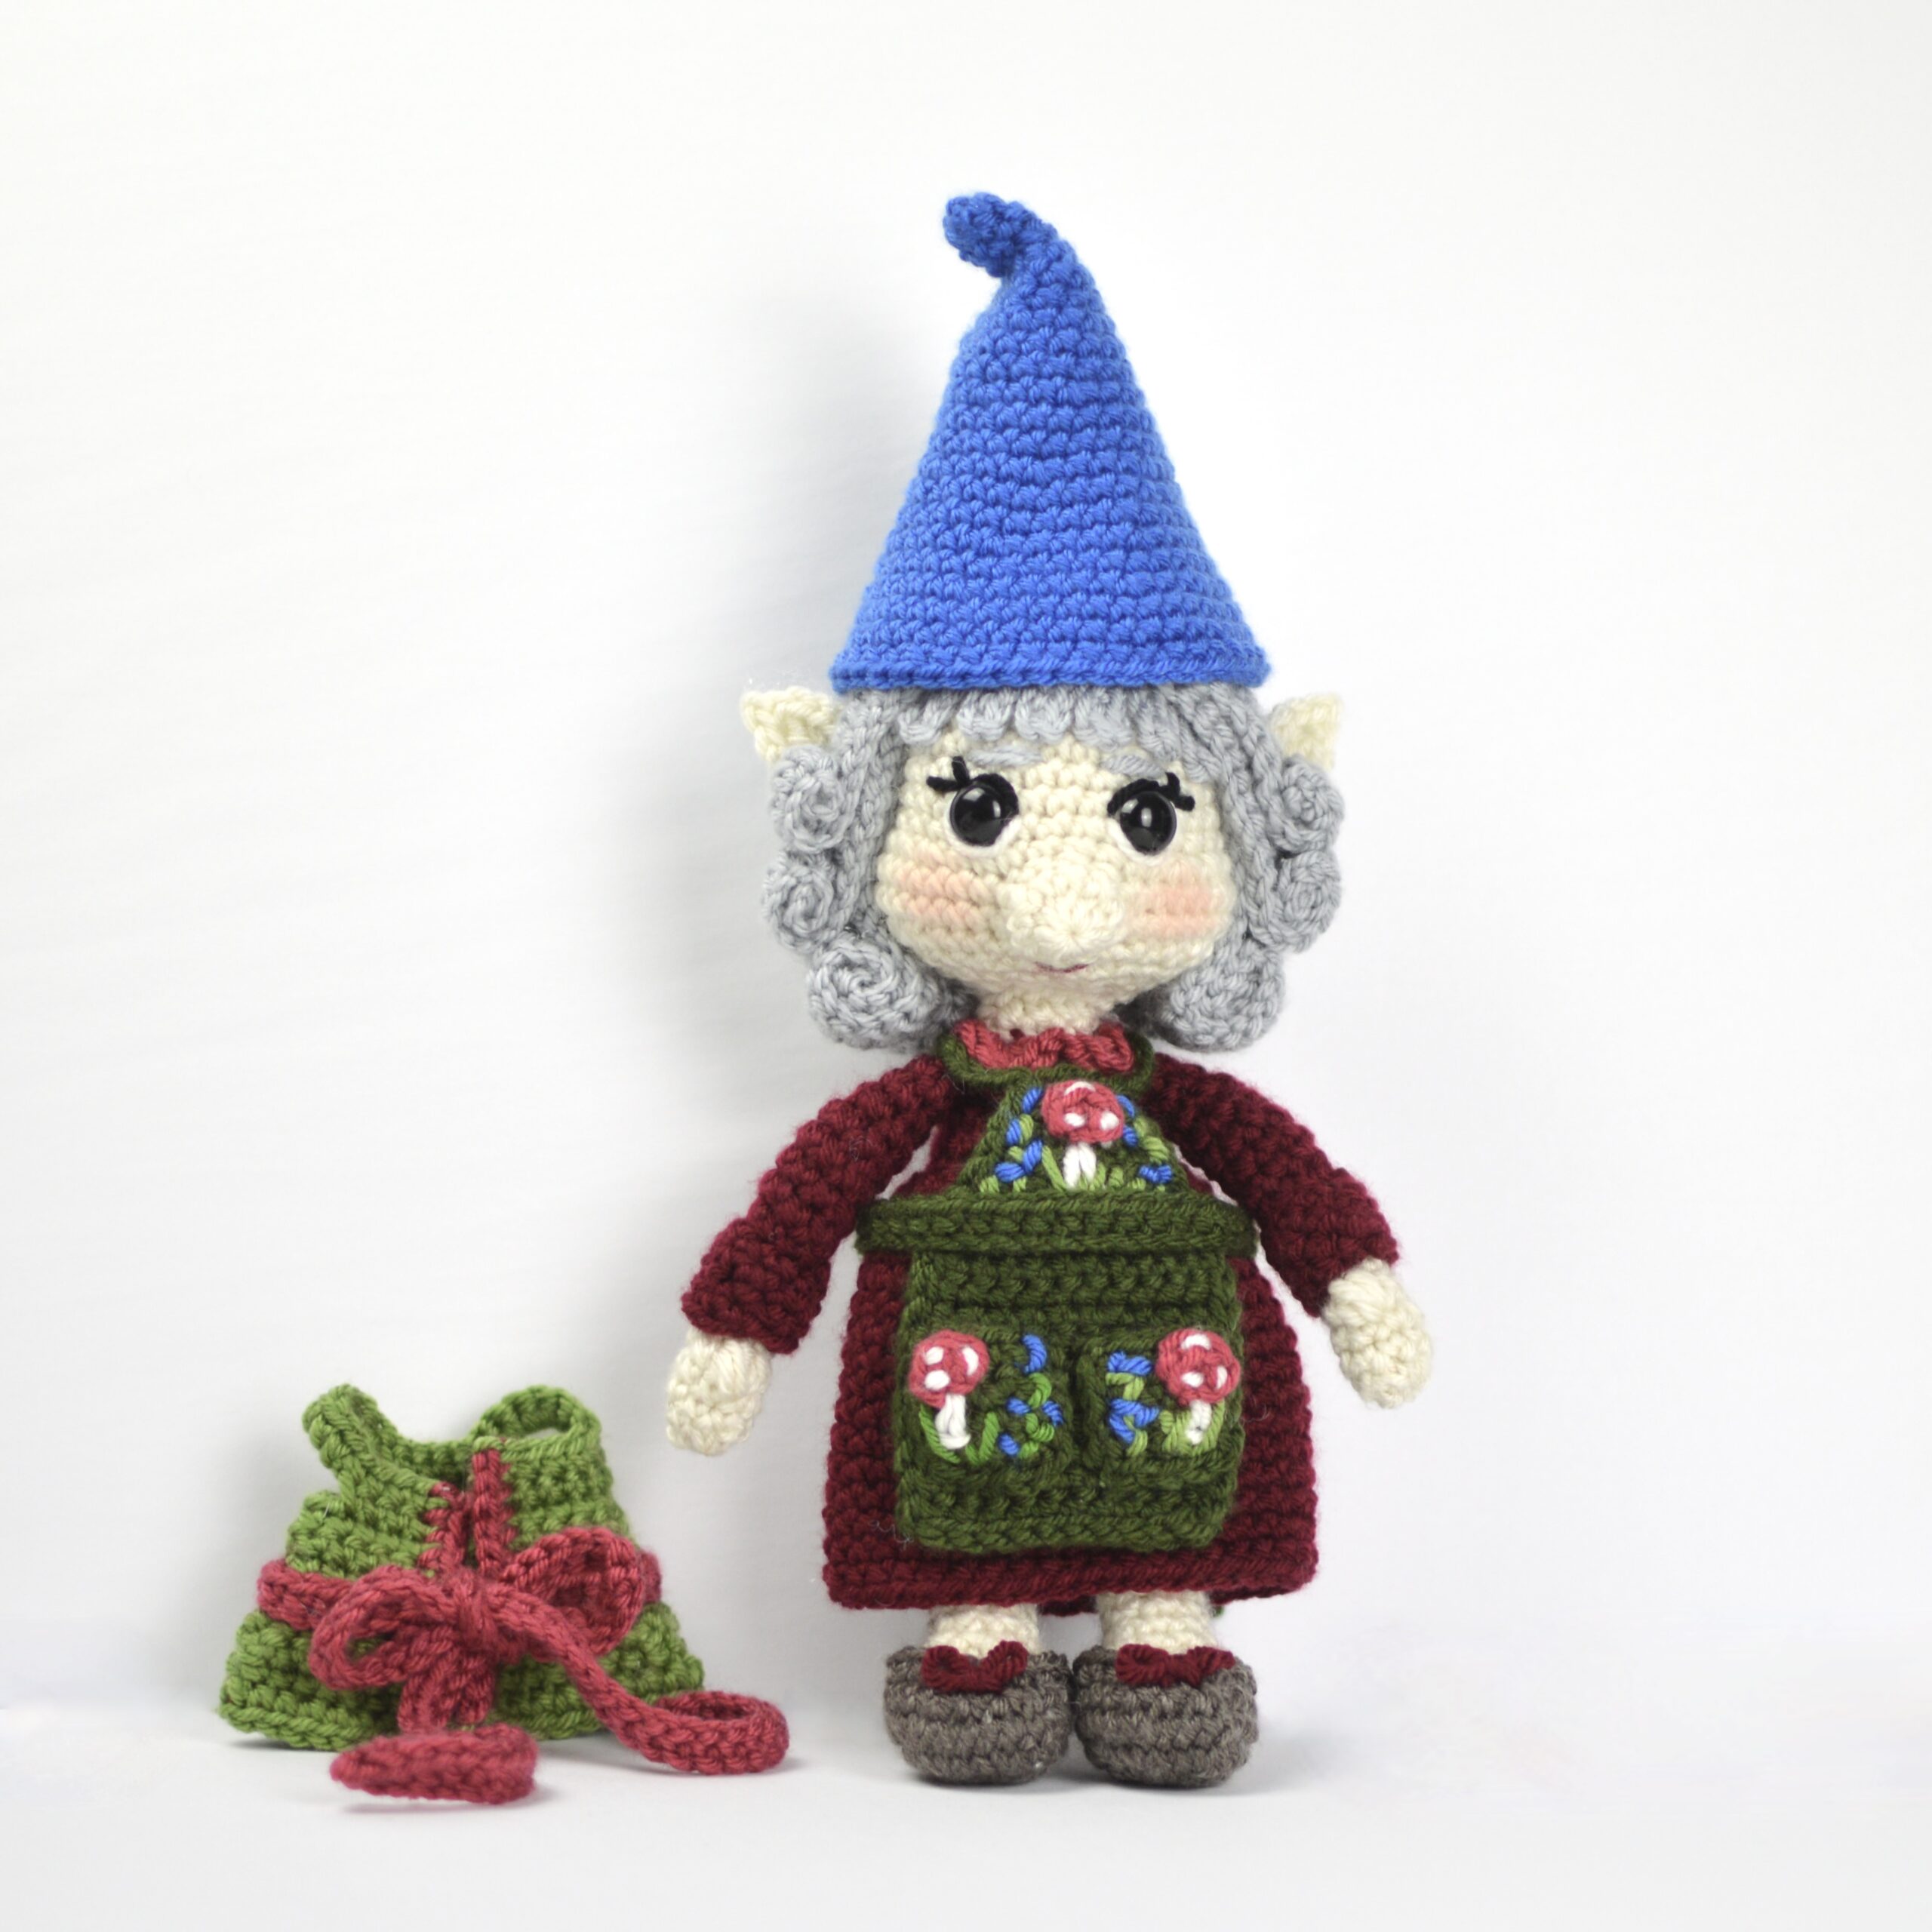 Reading Light Knitting Crochet Accessories, Christmas Birthday